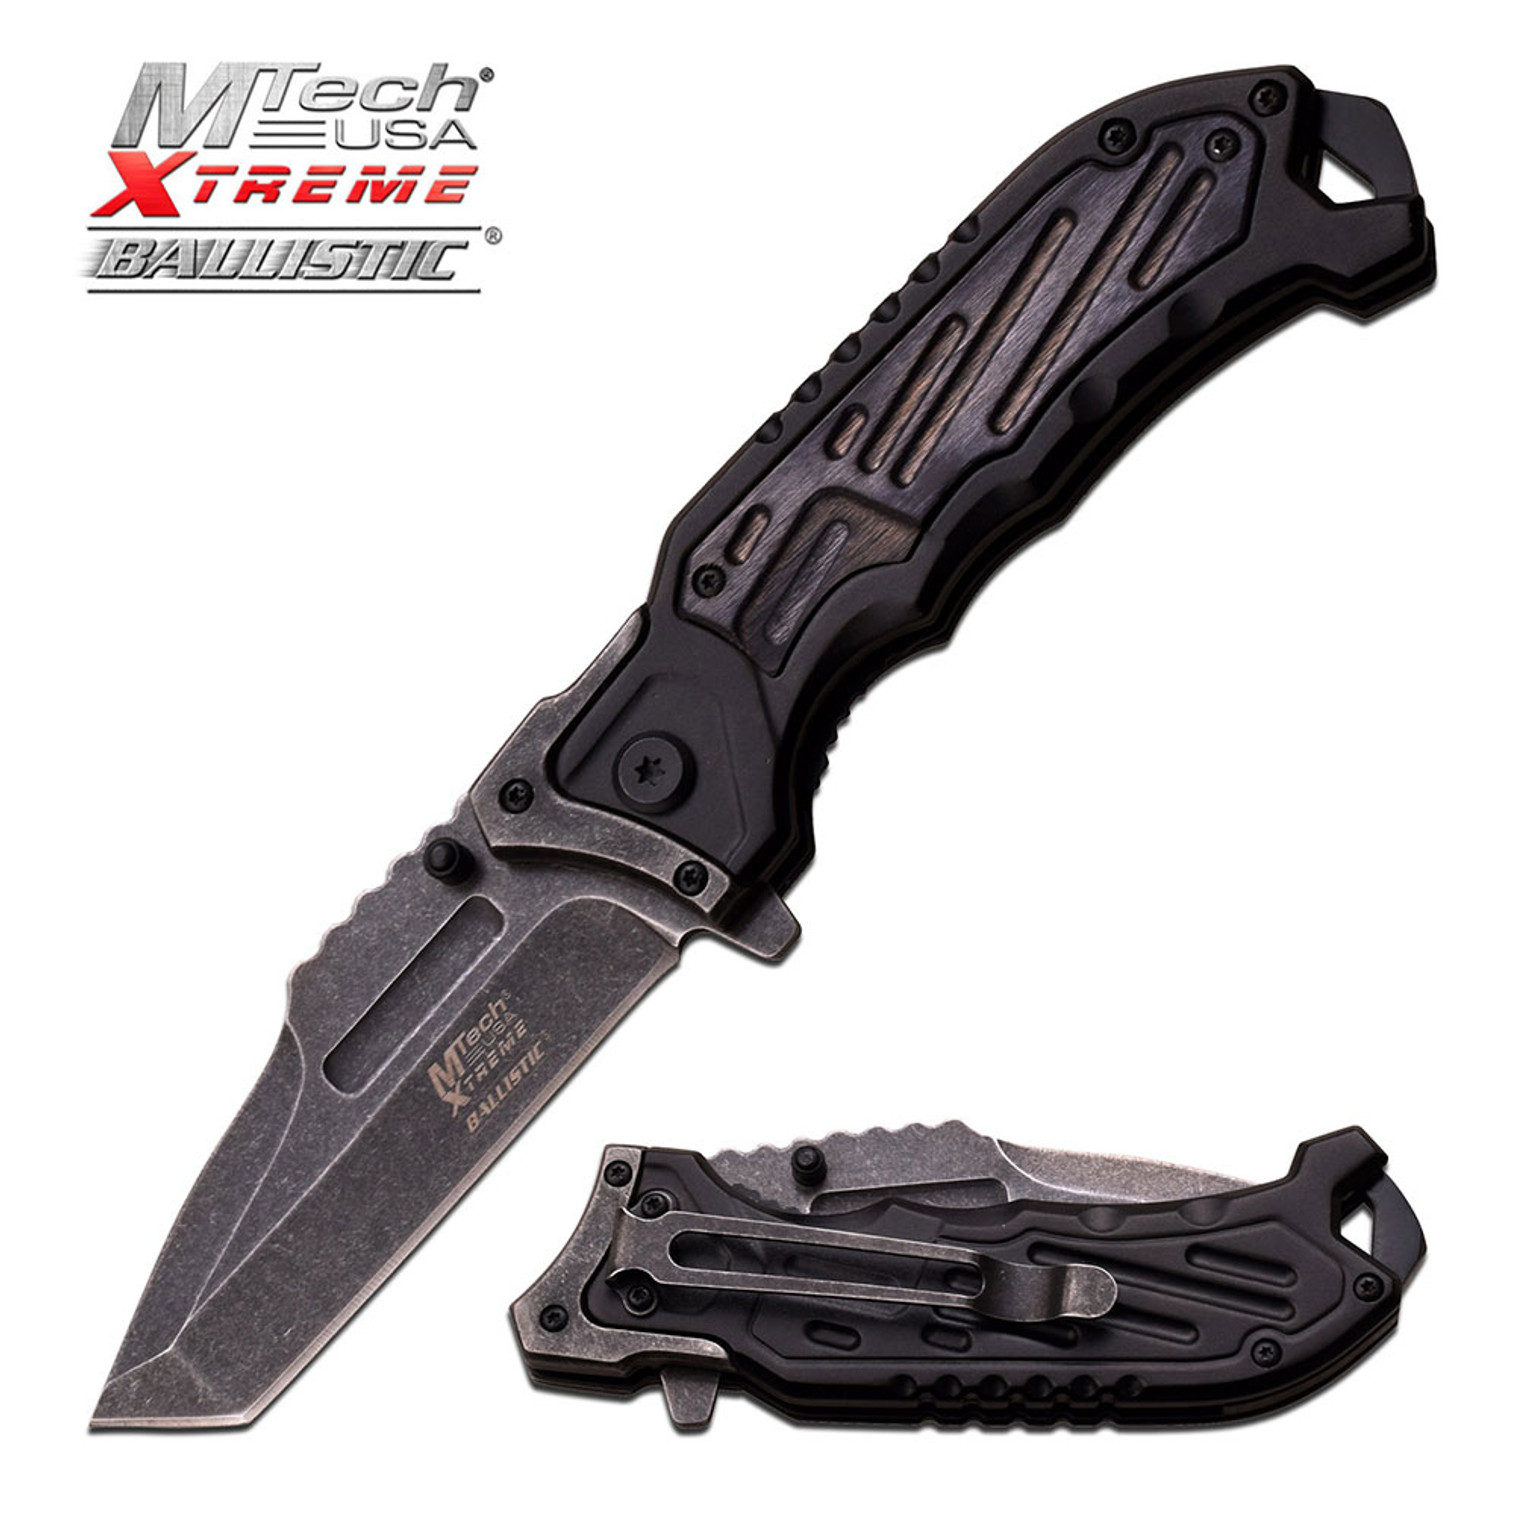 Mtech Xtreme MXA851GWP Folding Knife Assisted Opening